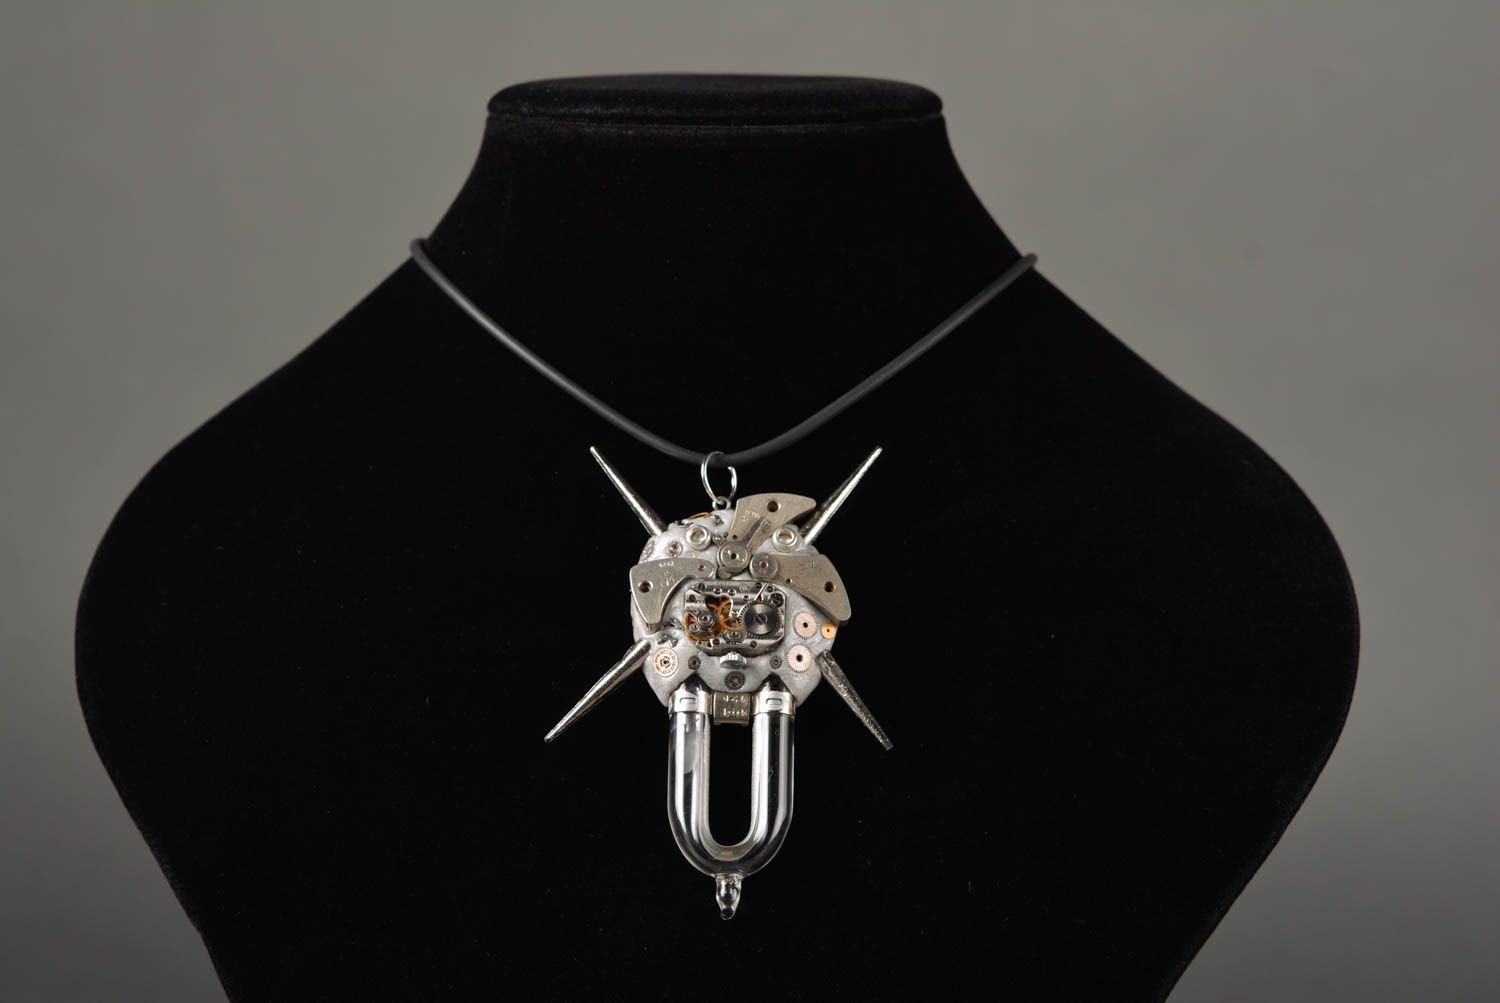 Handmade pendant designer jewelry unusual pendant metal pendant gift ideas photo 2